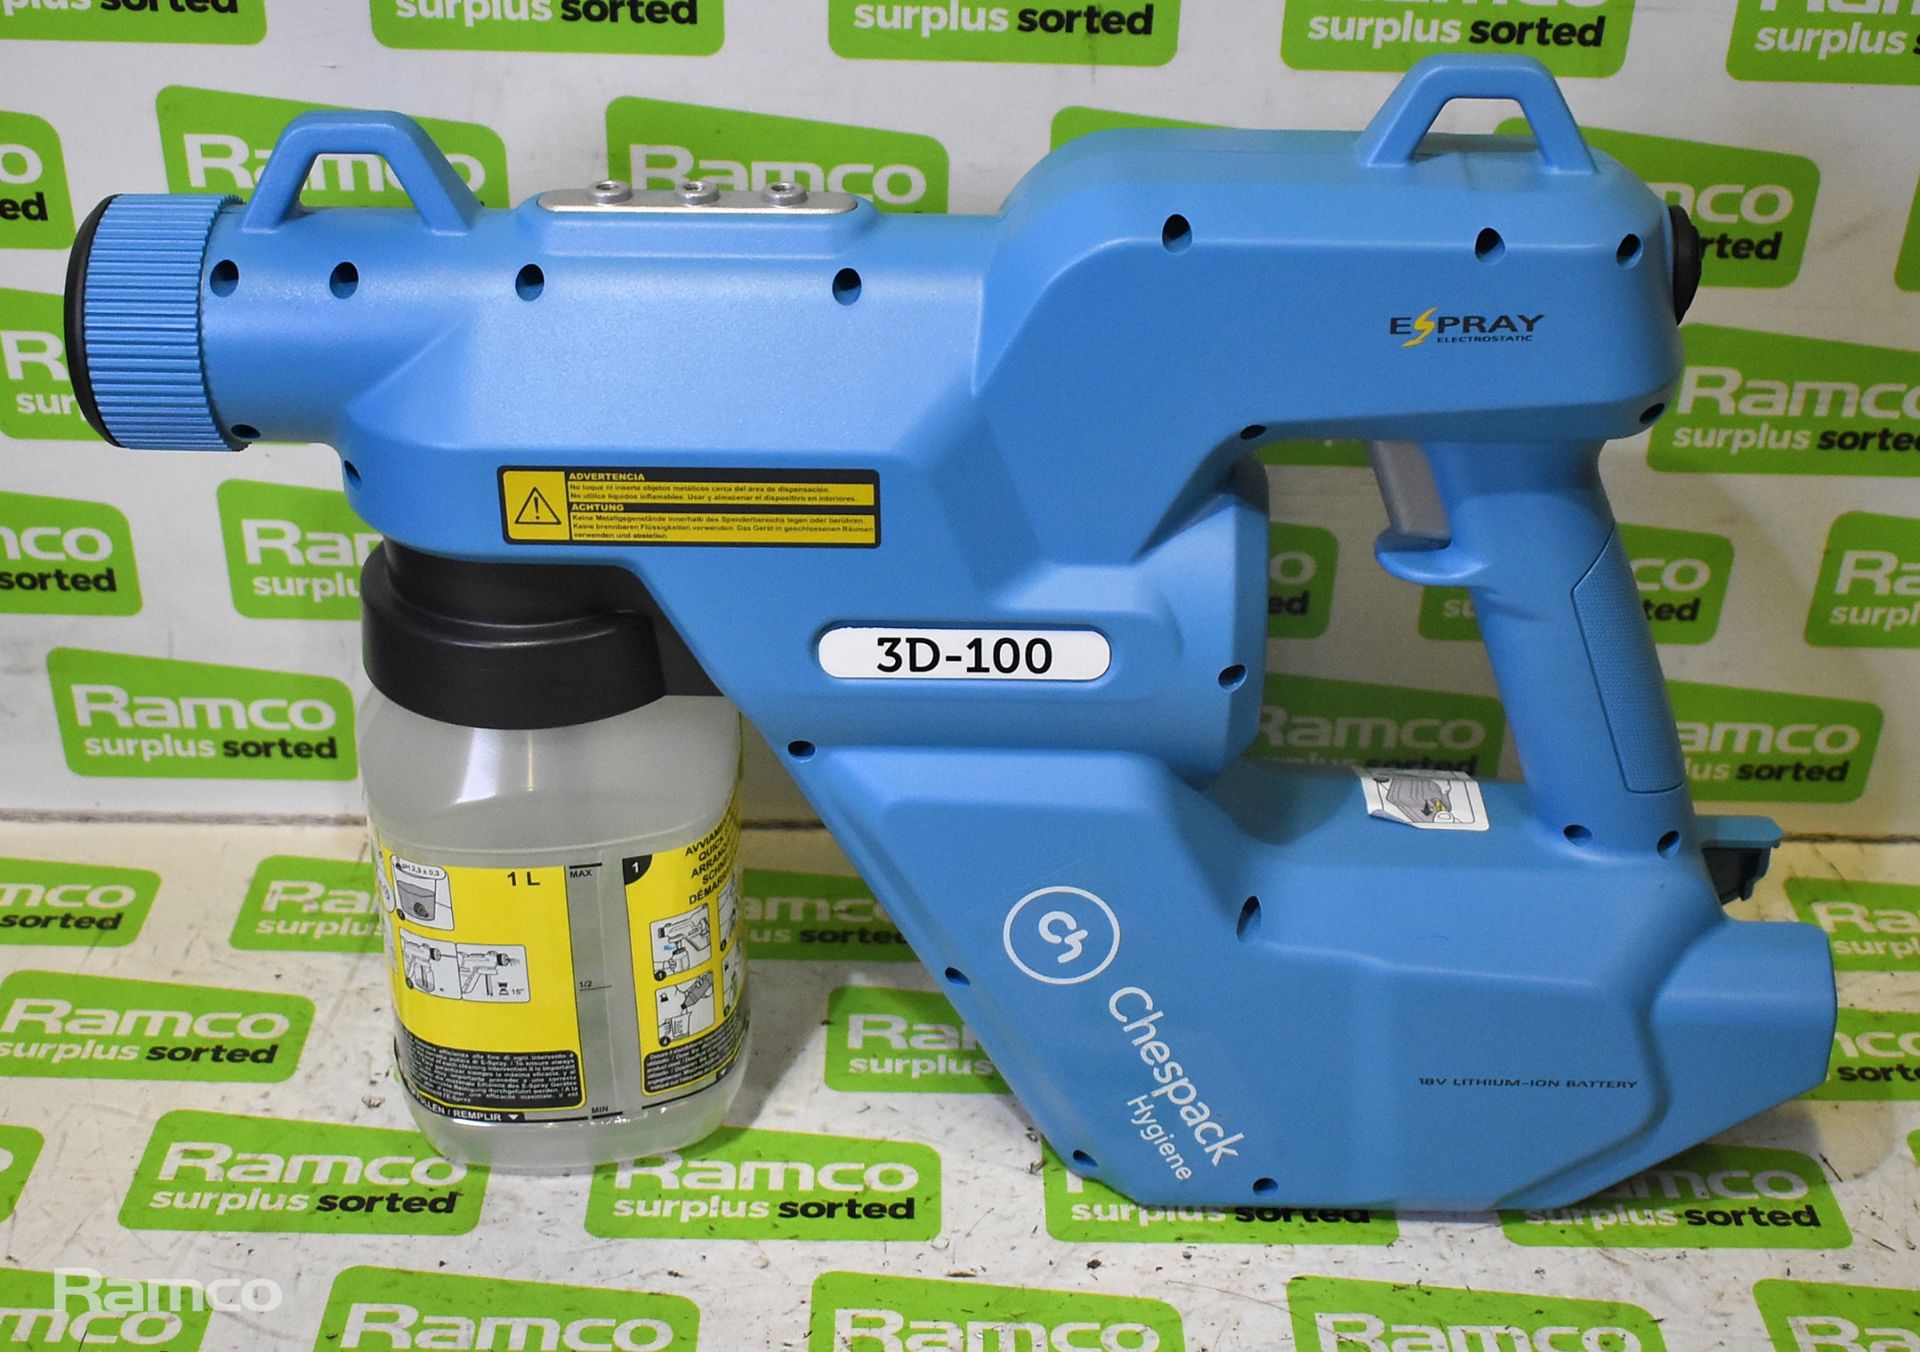 FIMAP E-Spray electrostatic hygienization industrial disinfection gun spray kit - Image 4 of 8